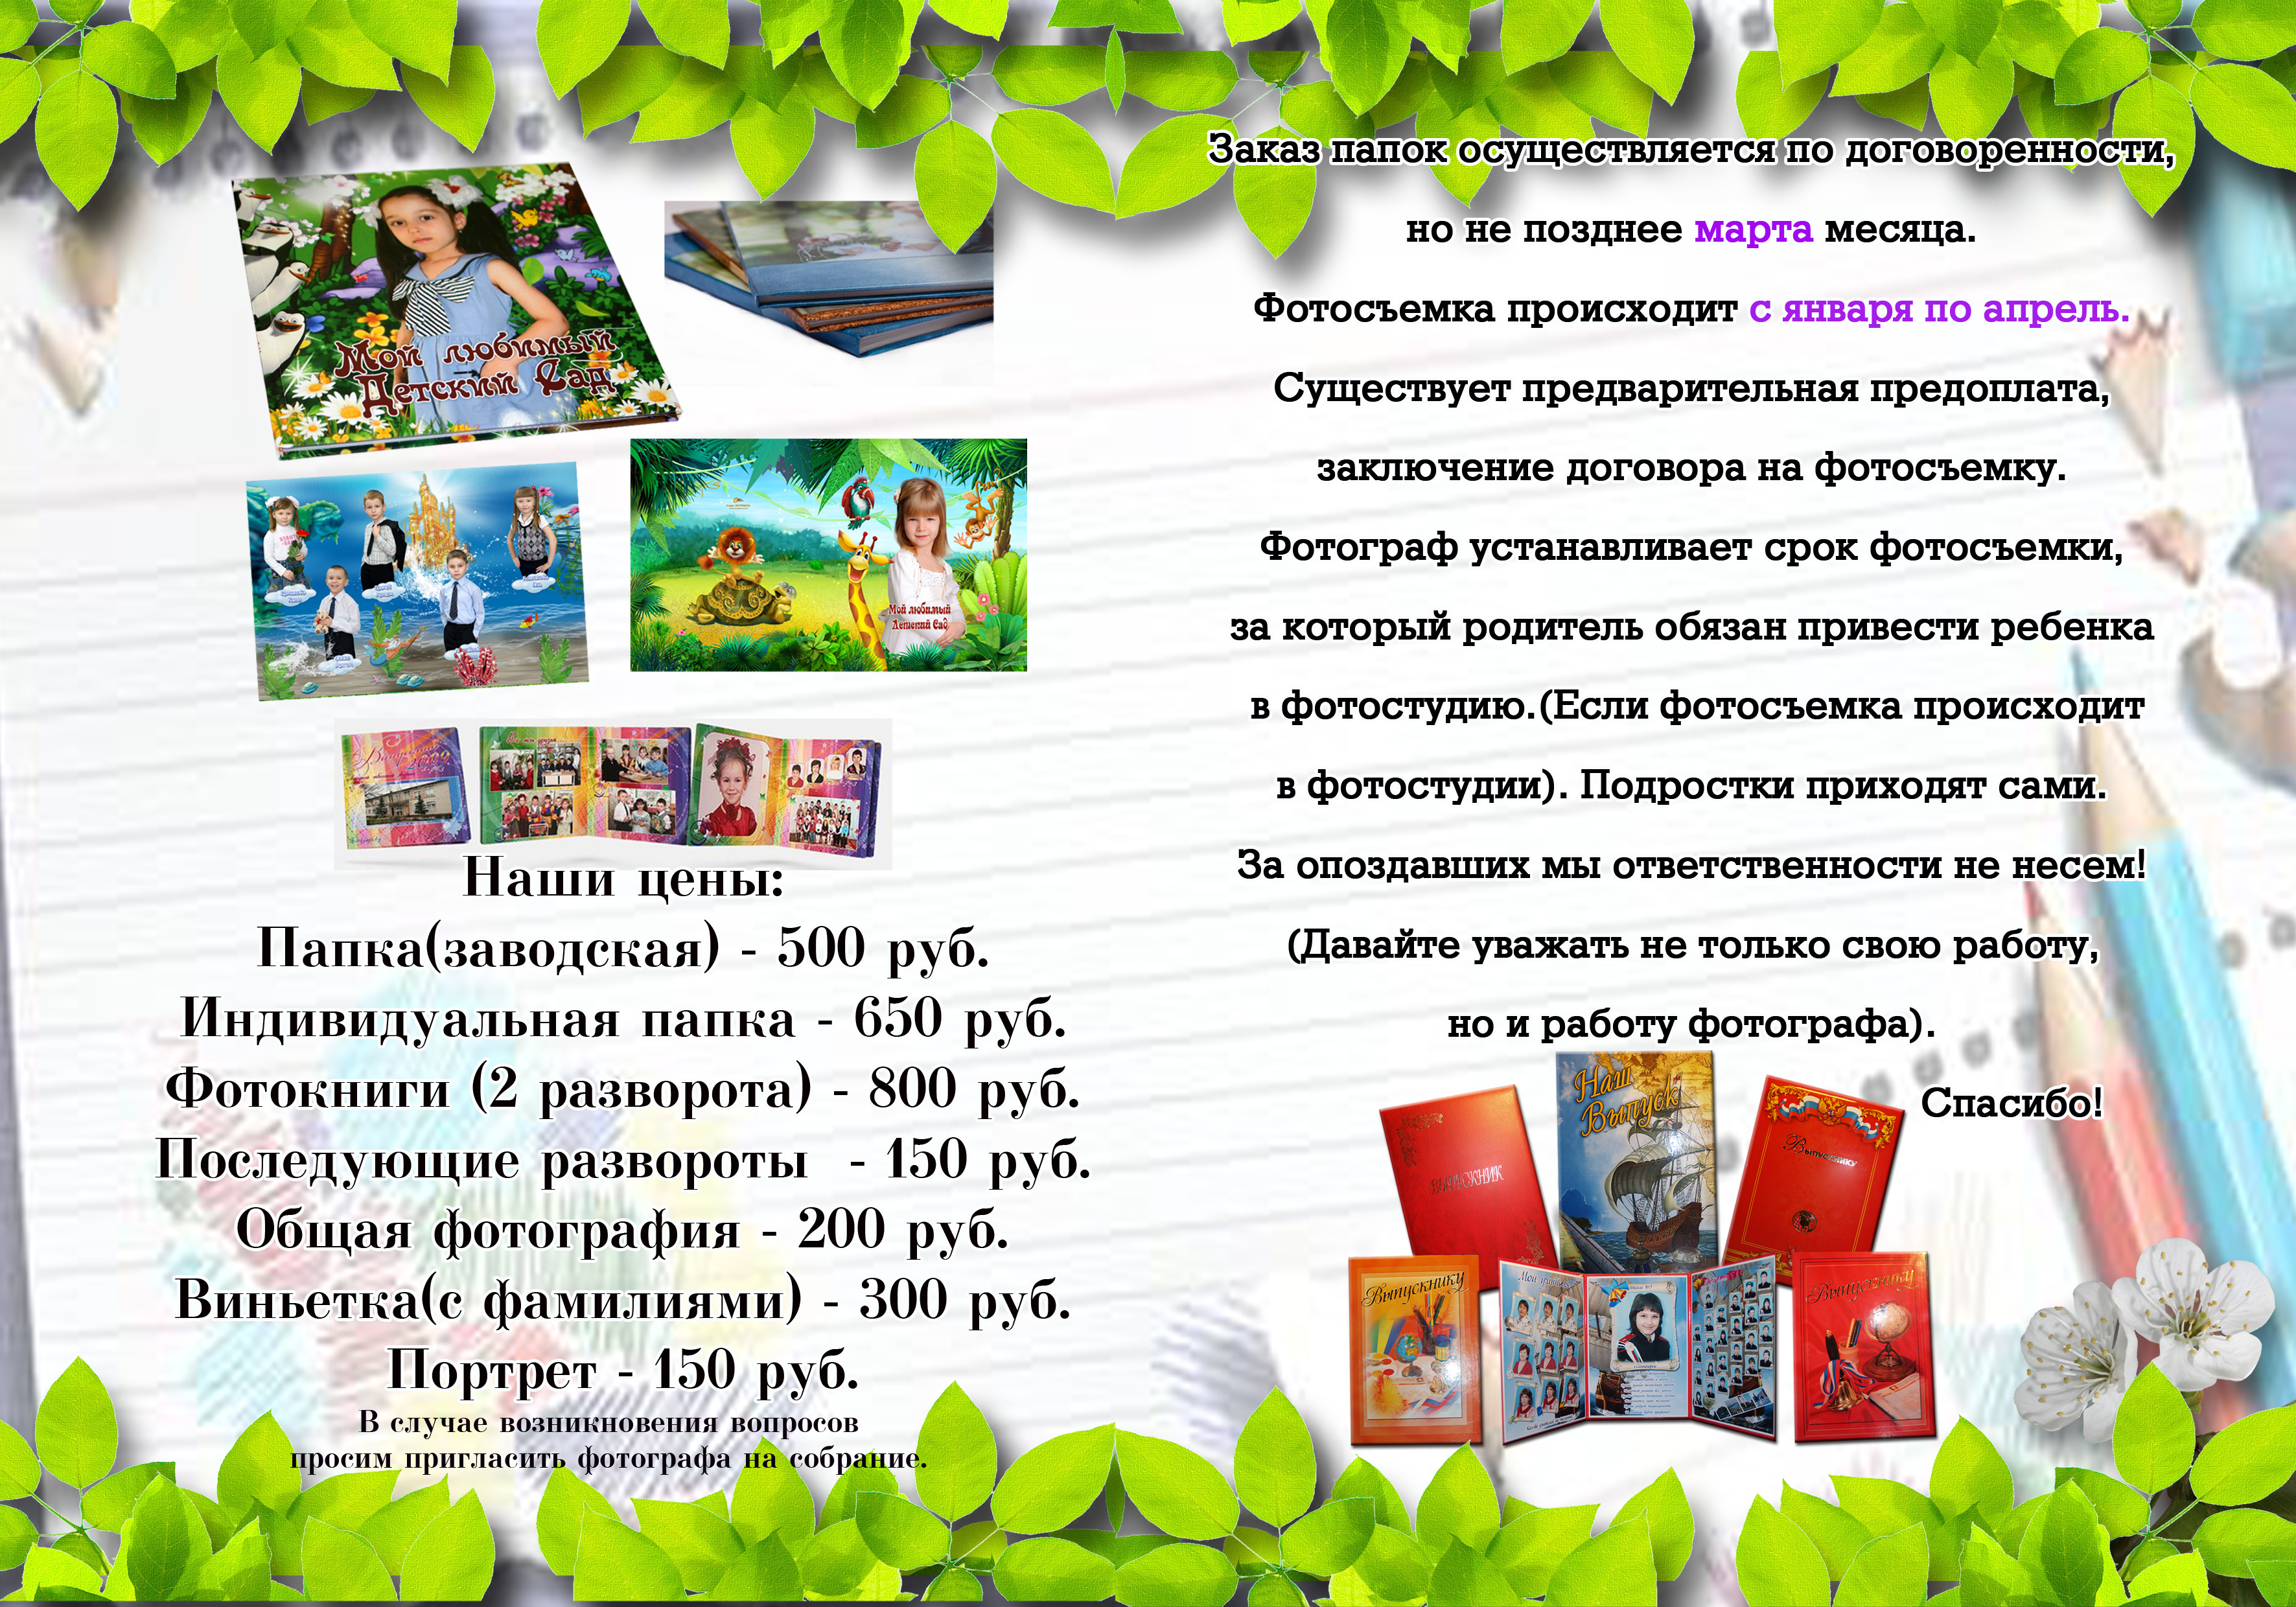 Саяногорск Инфо - vnutrennyaya-broshura.jpg, Скачано: 861